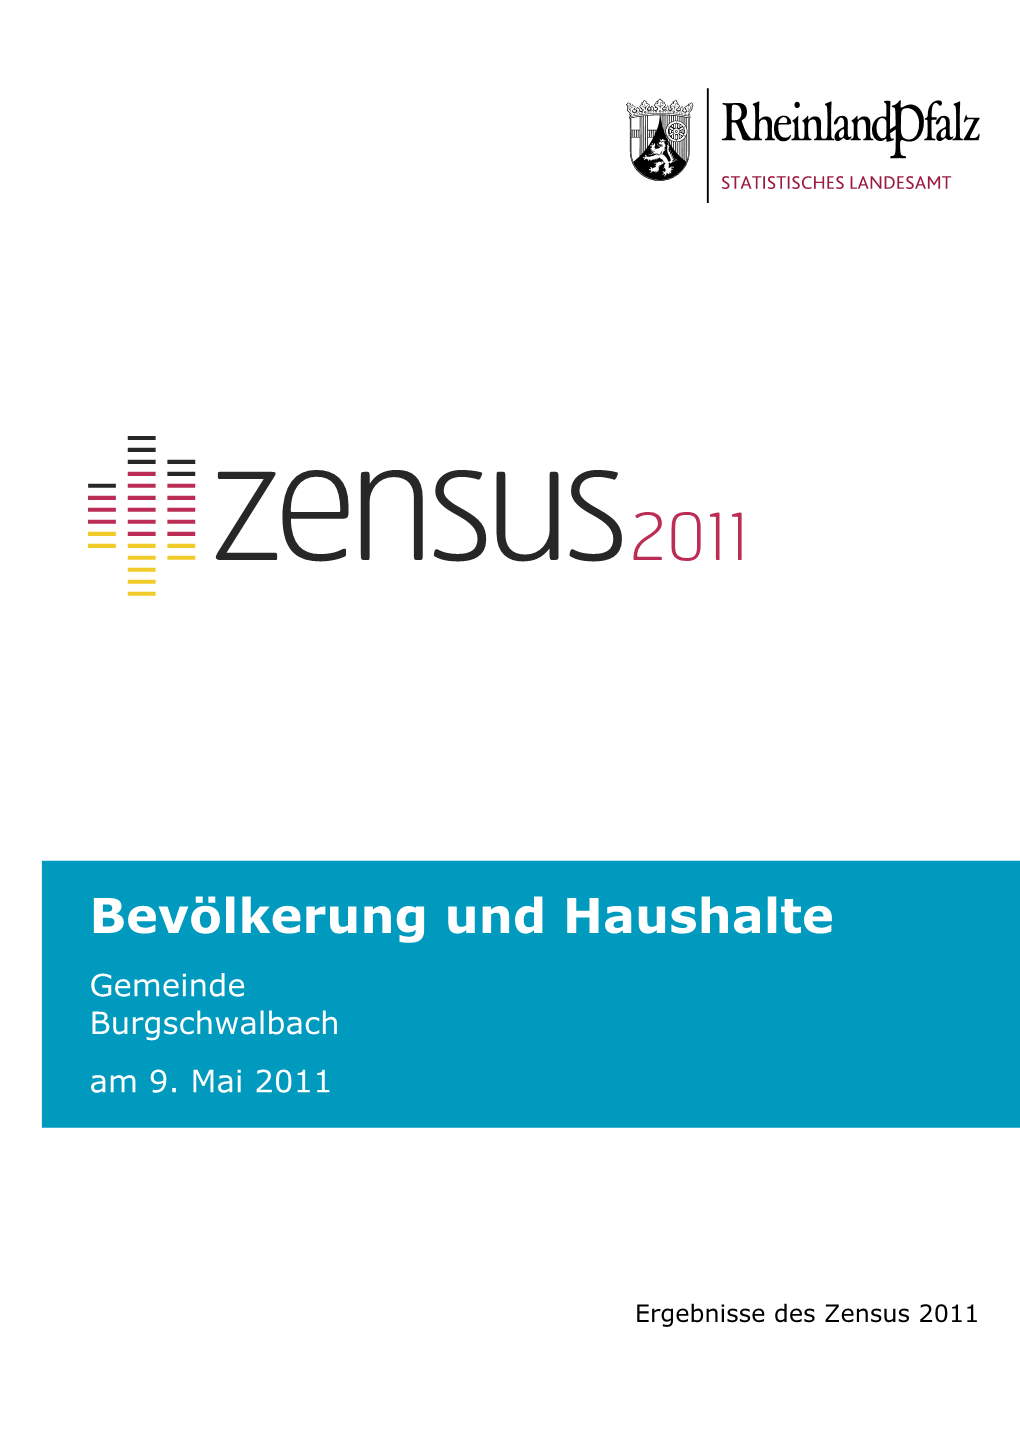 Bevölkerung Und Haushalte Am 9. Mai 2011, Burgschwalbach